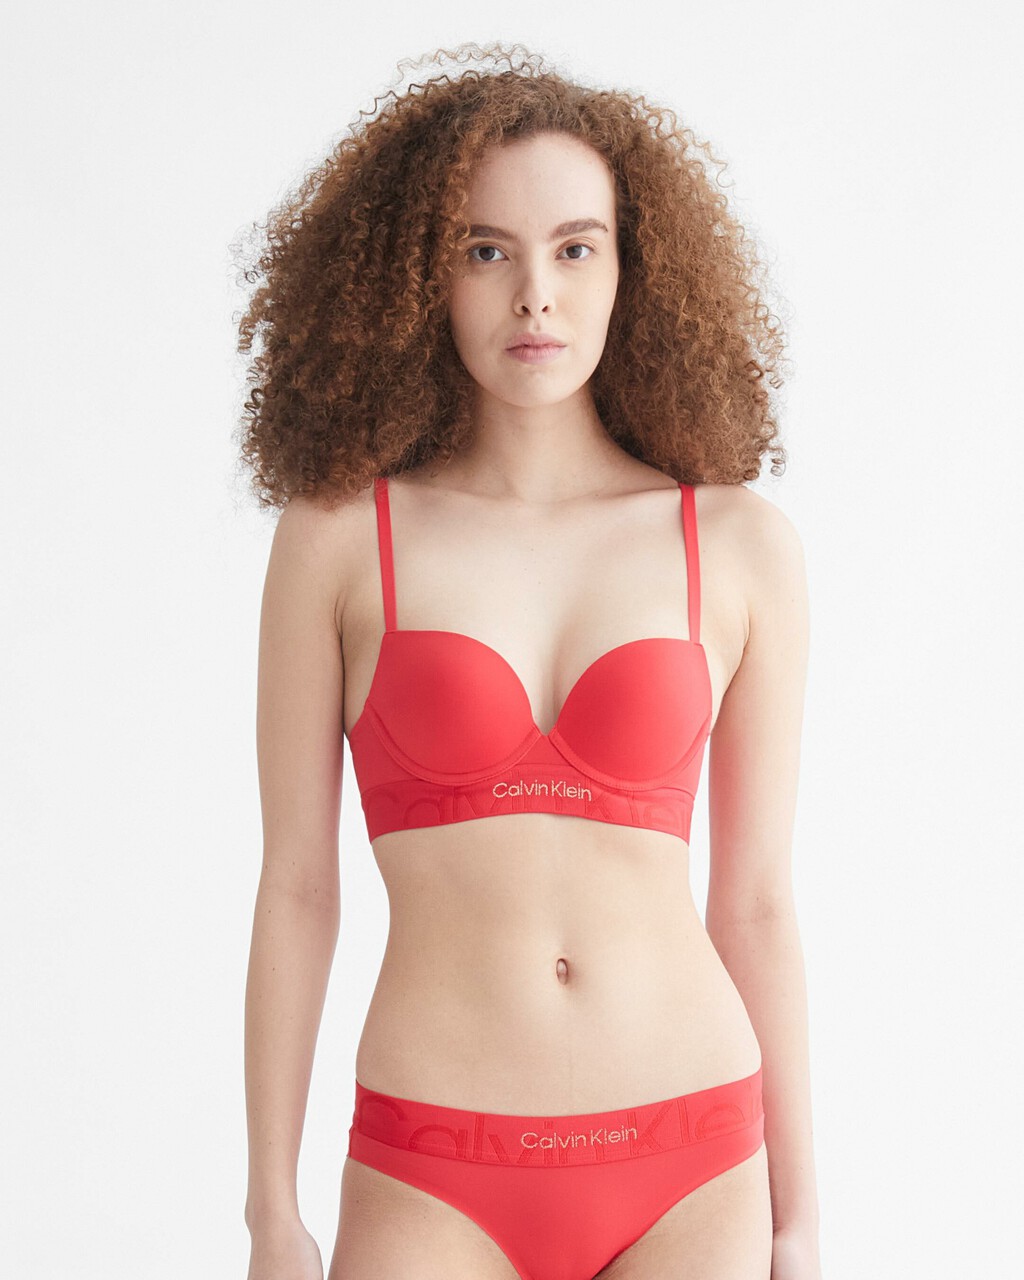 Calvin Klein Women's Form Push Up Plunge Bra, 30B, Manic red: Buy